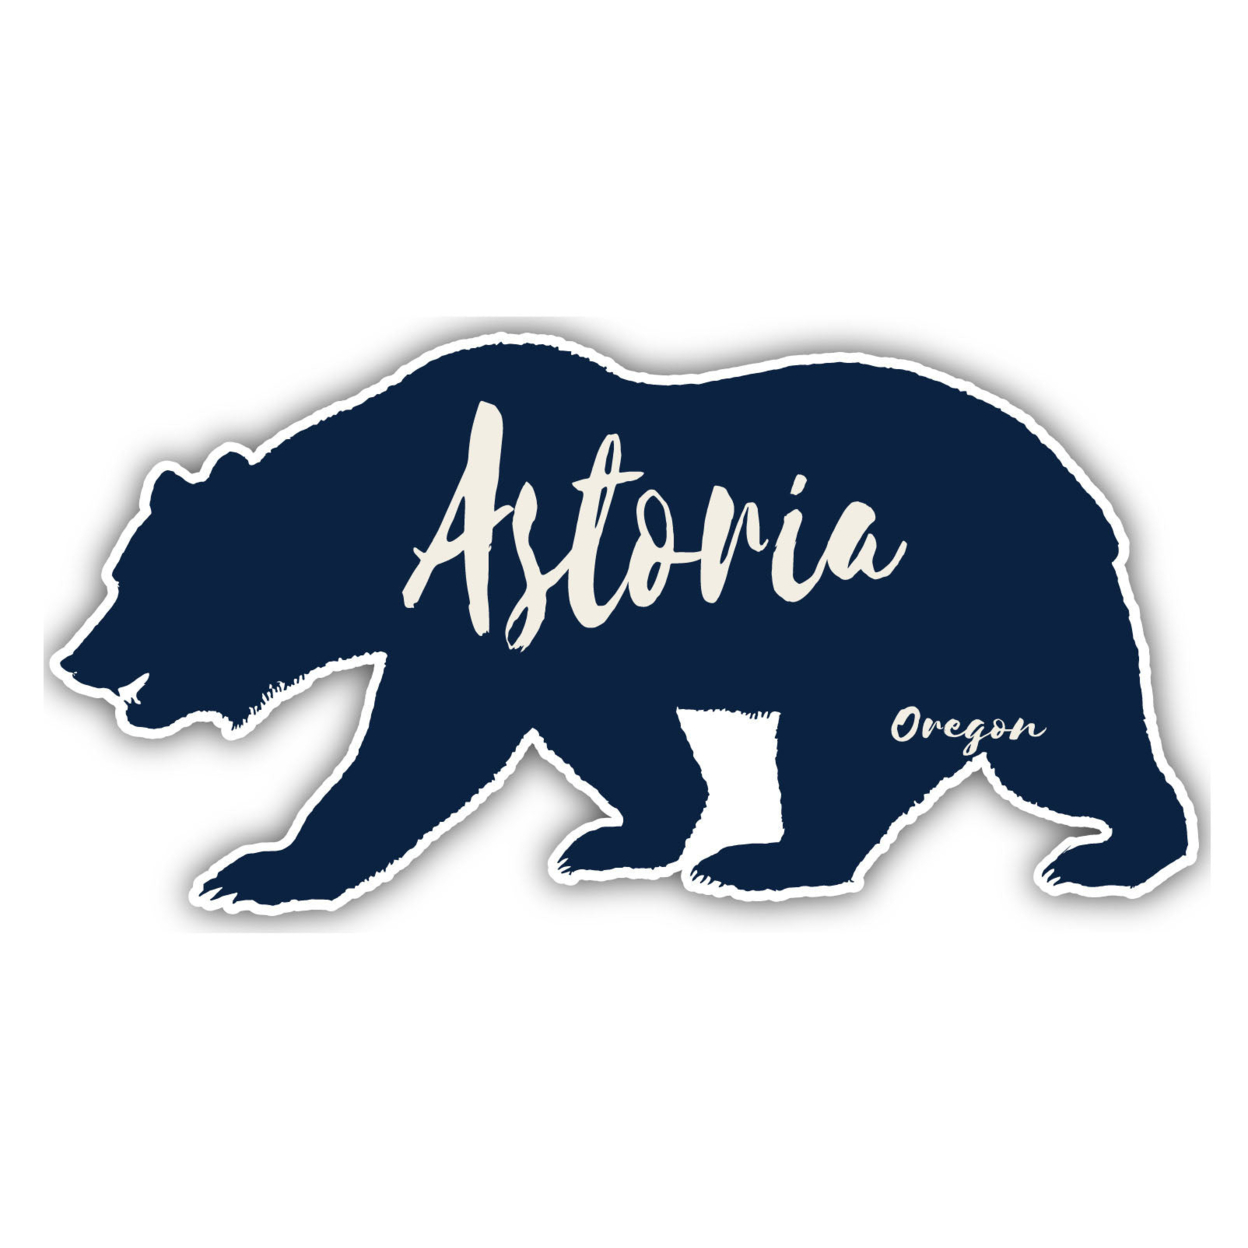 Astoria Oregon Souvenir Decorative Stickers (Choose Theme And Size) - 4-Pack, 4-Inch, Camp Life